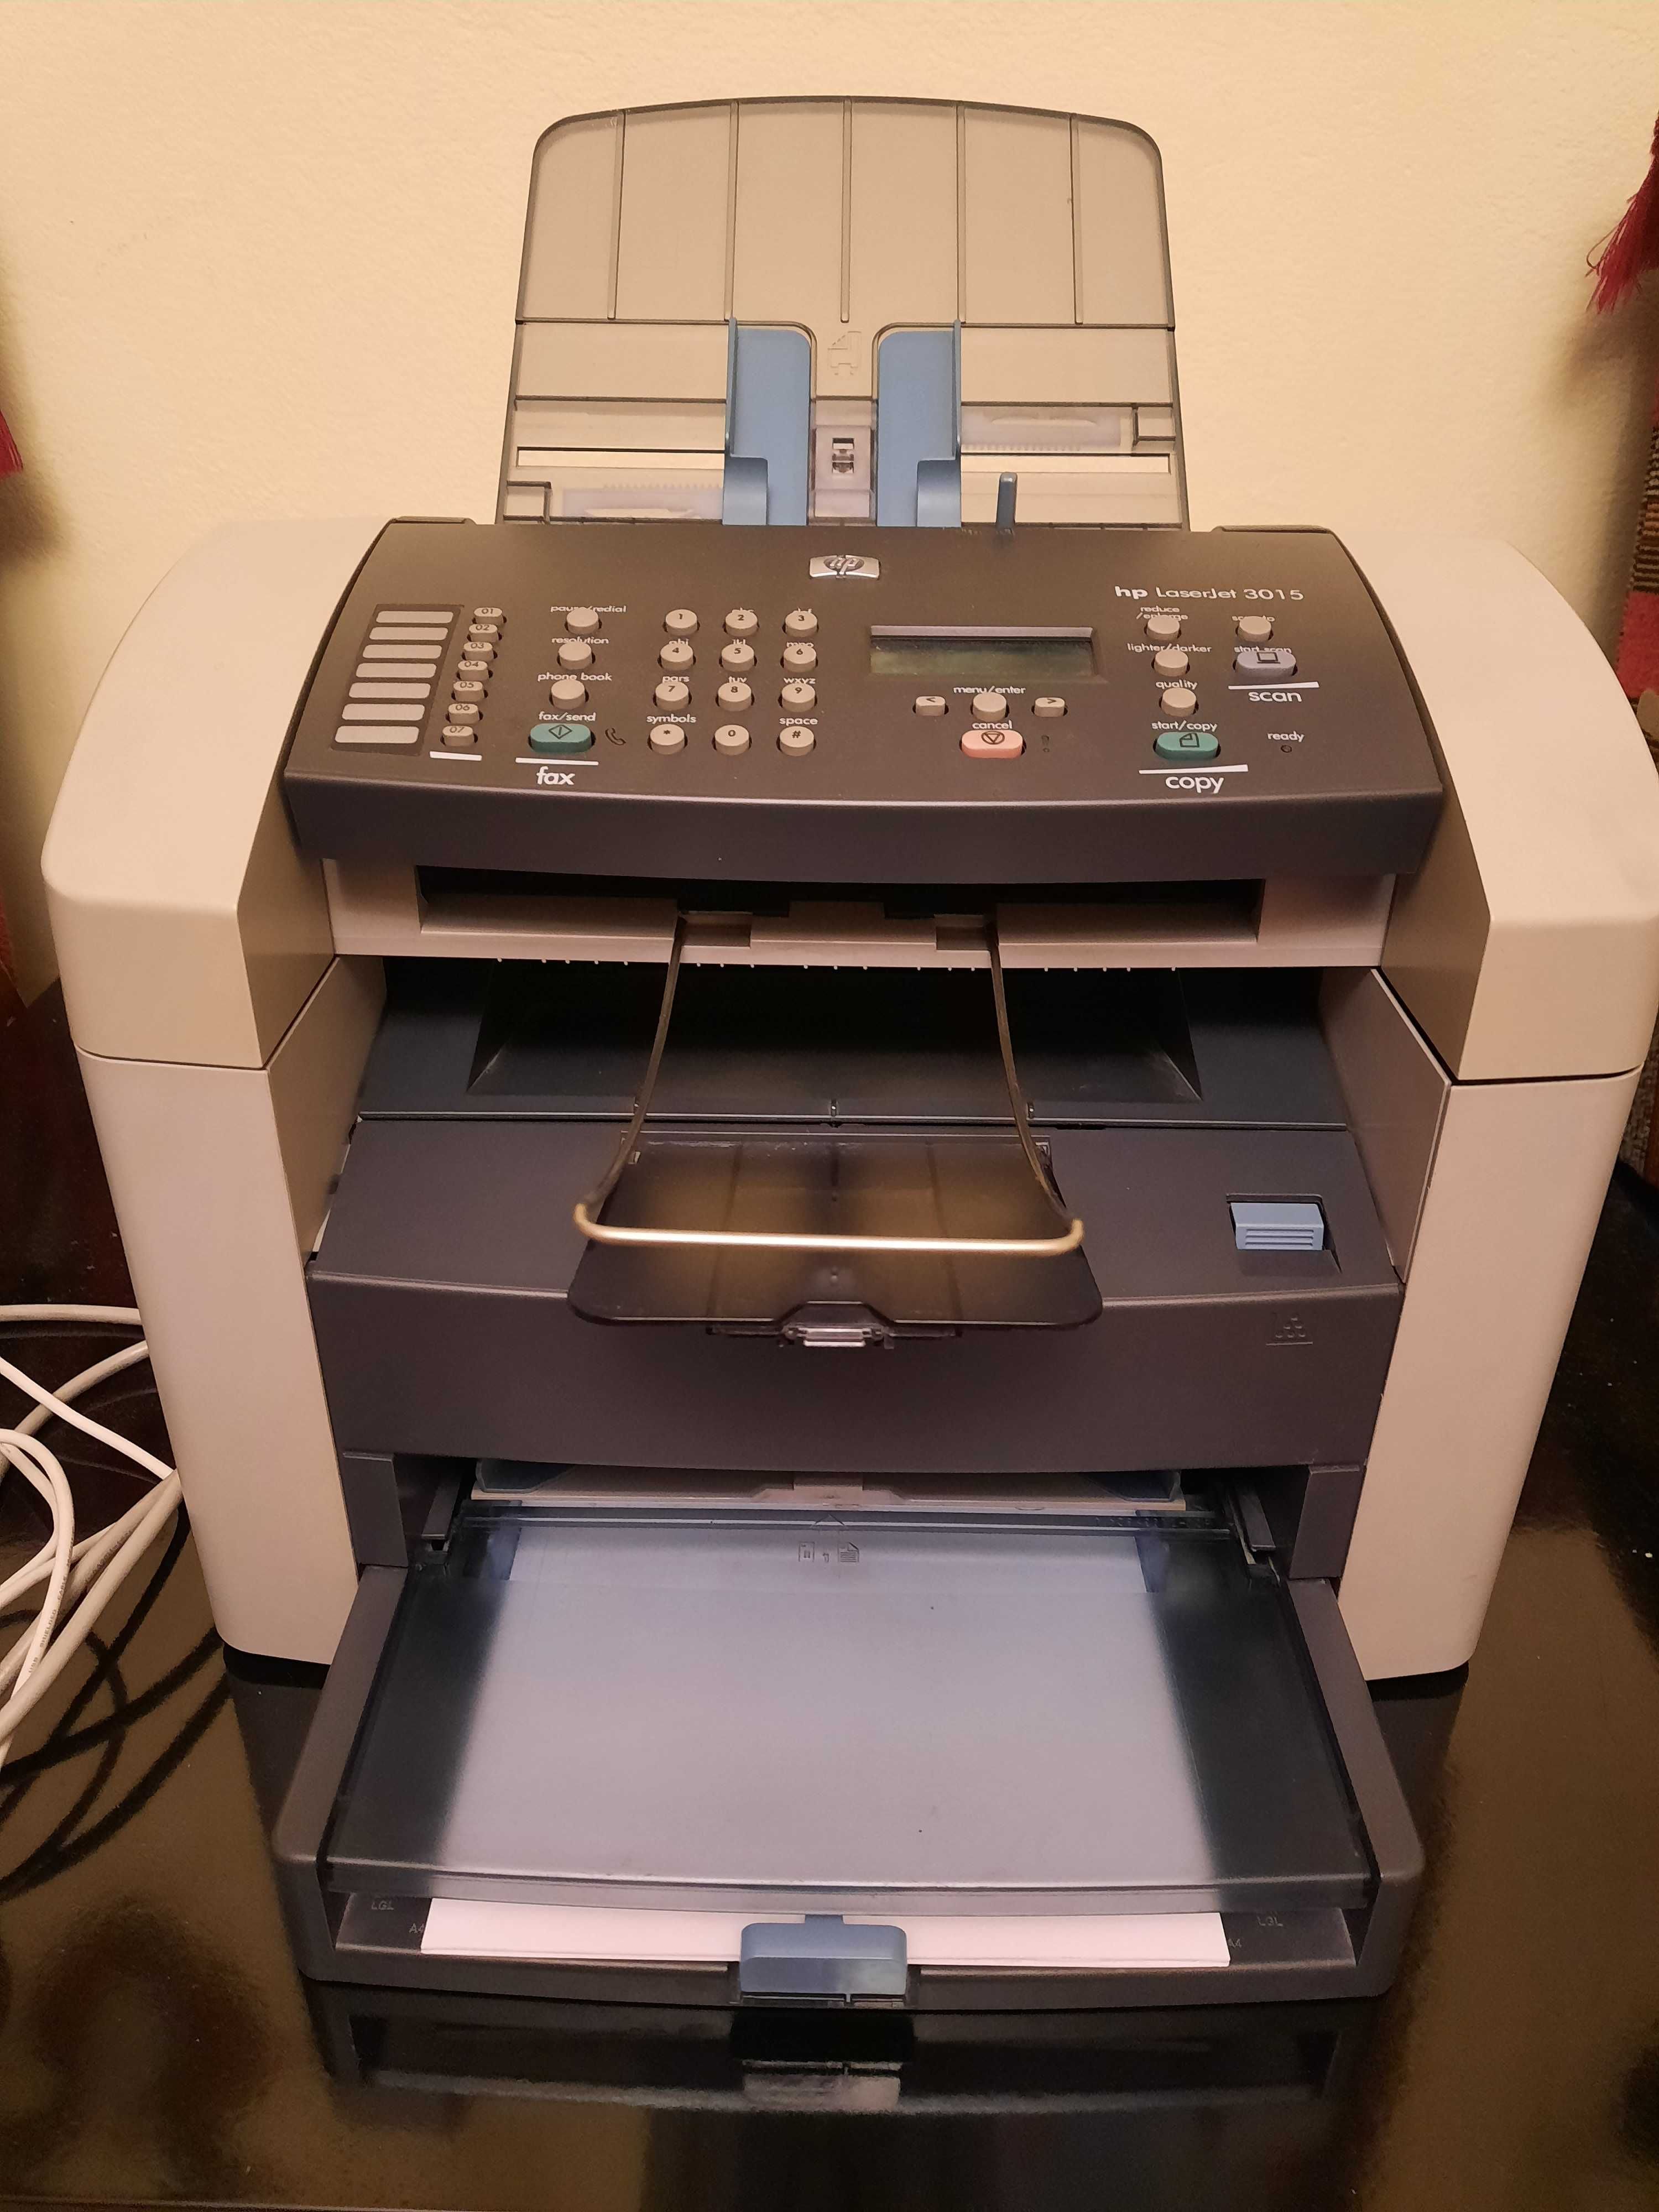 Vand imprimanta laserjet HP 3015